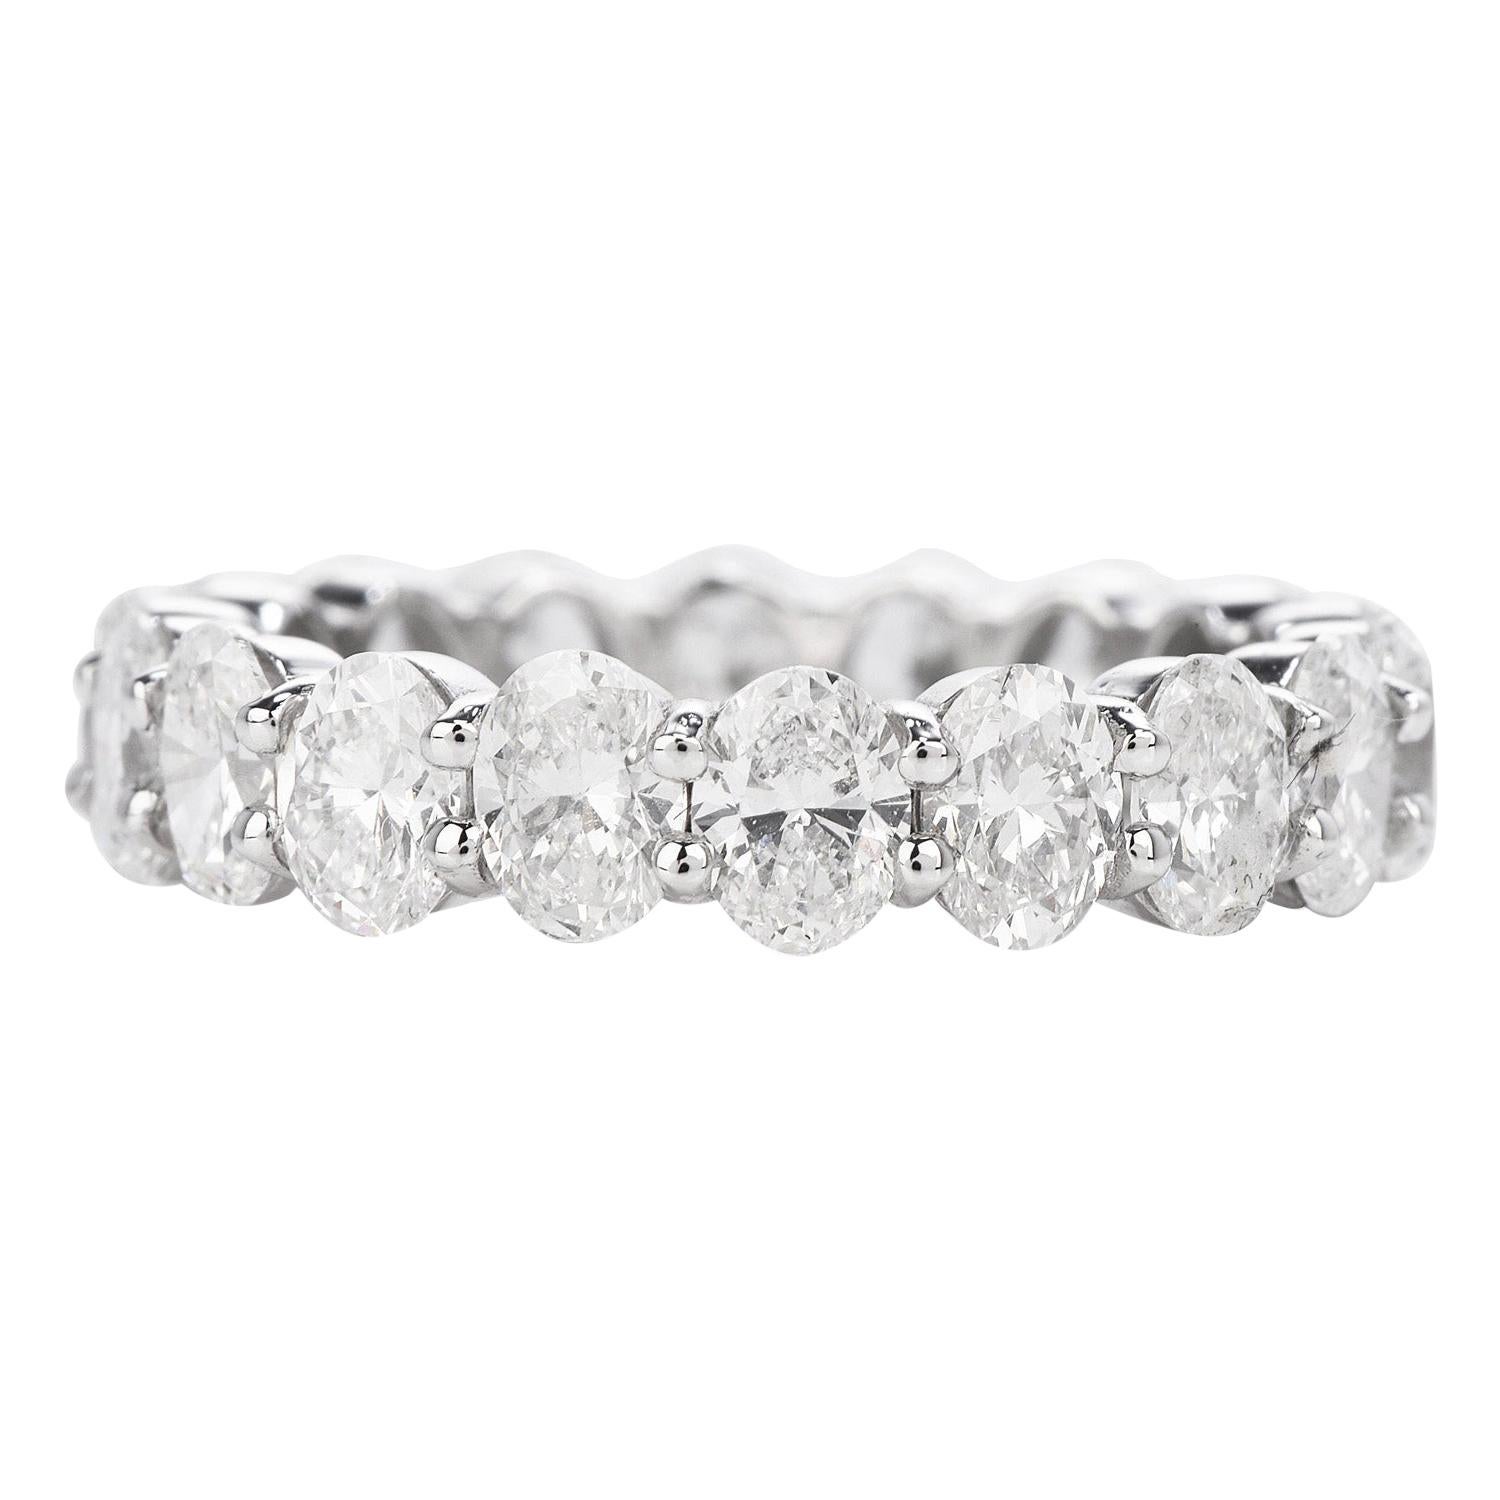 Dover 4.32 Carat Oval Cut Diamond Eternity Gold Wedding Band Ring